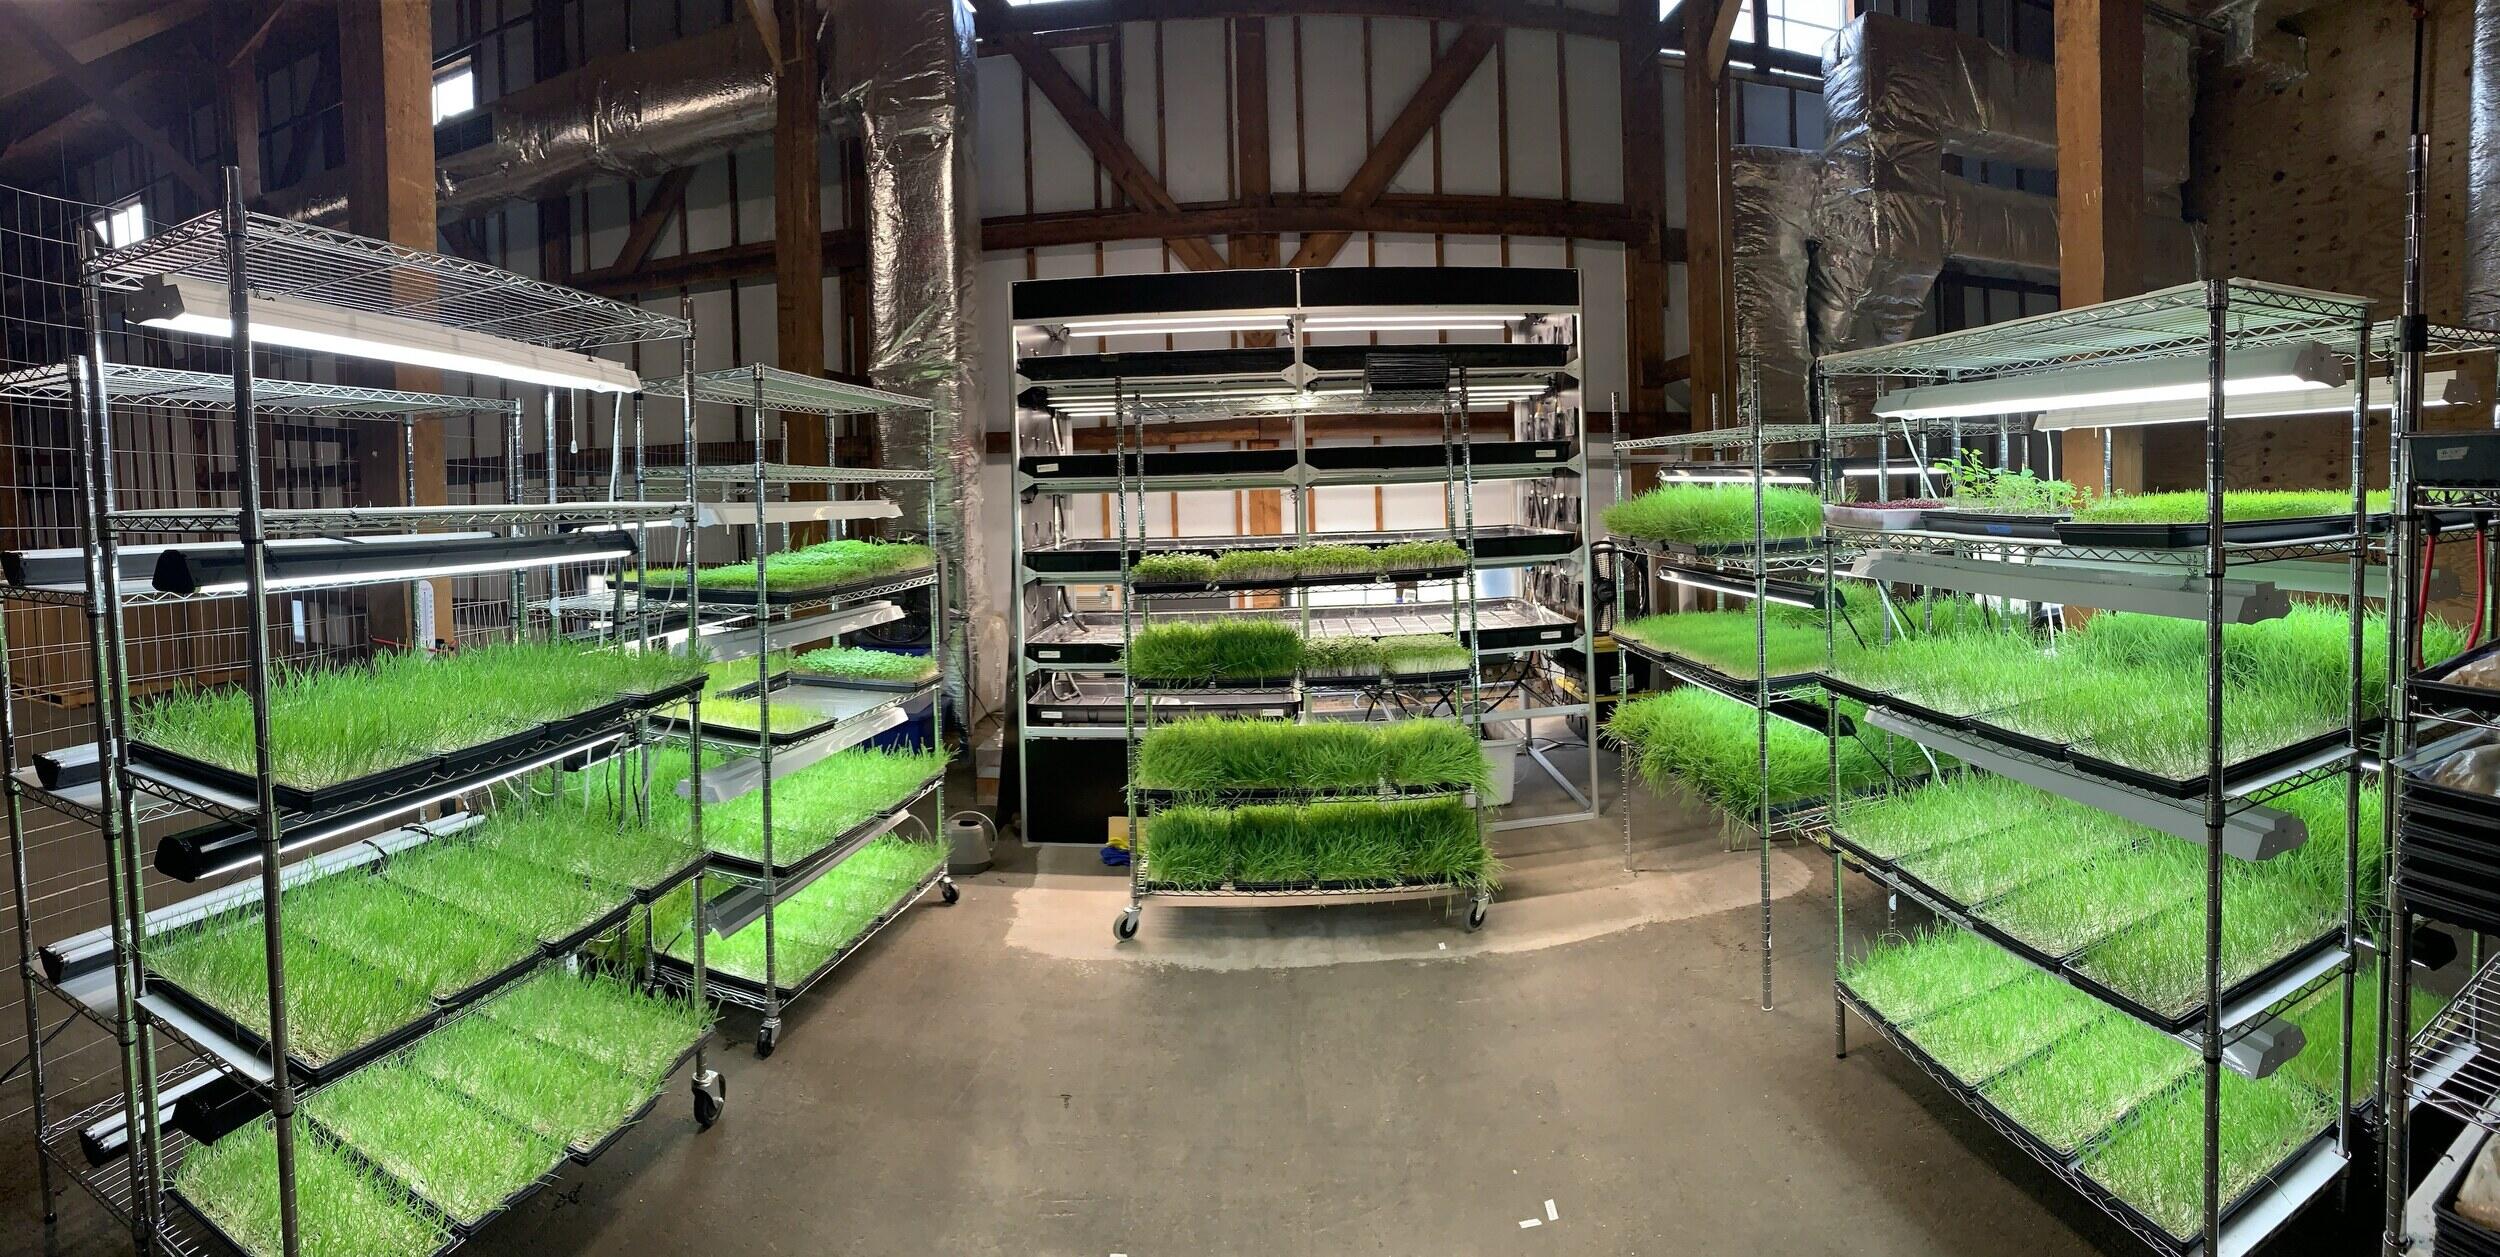 A room with a microgreen growing setup.